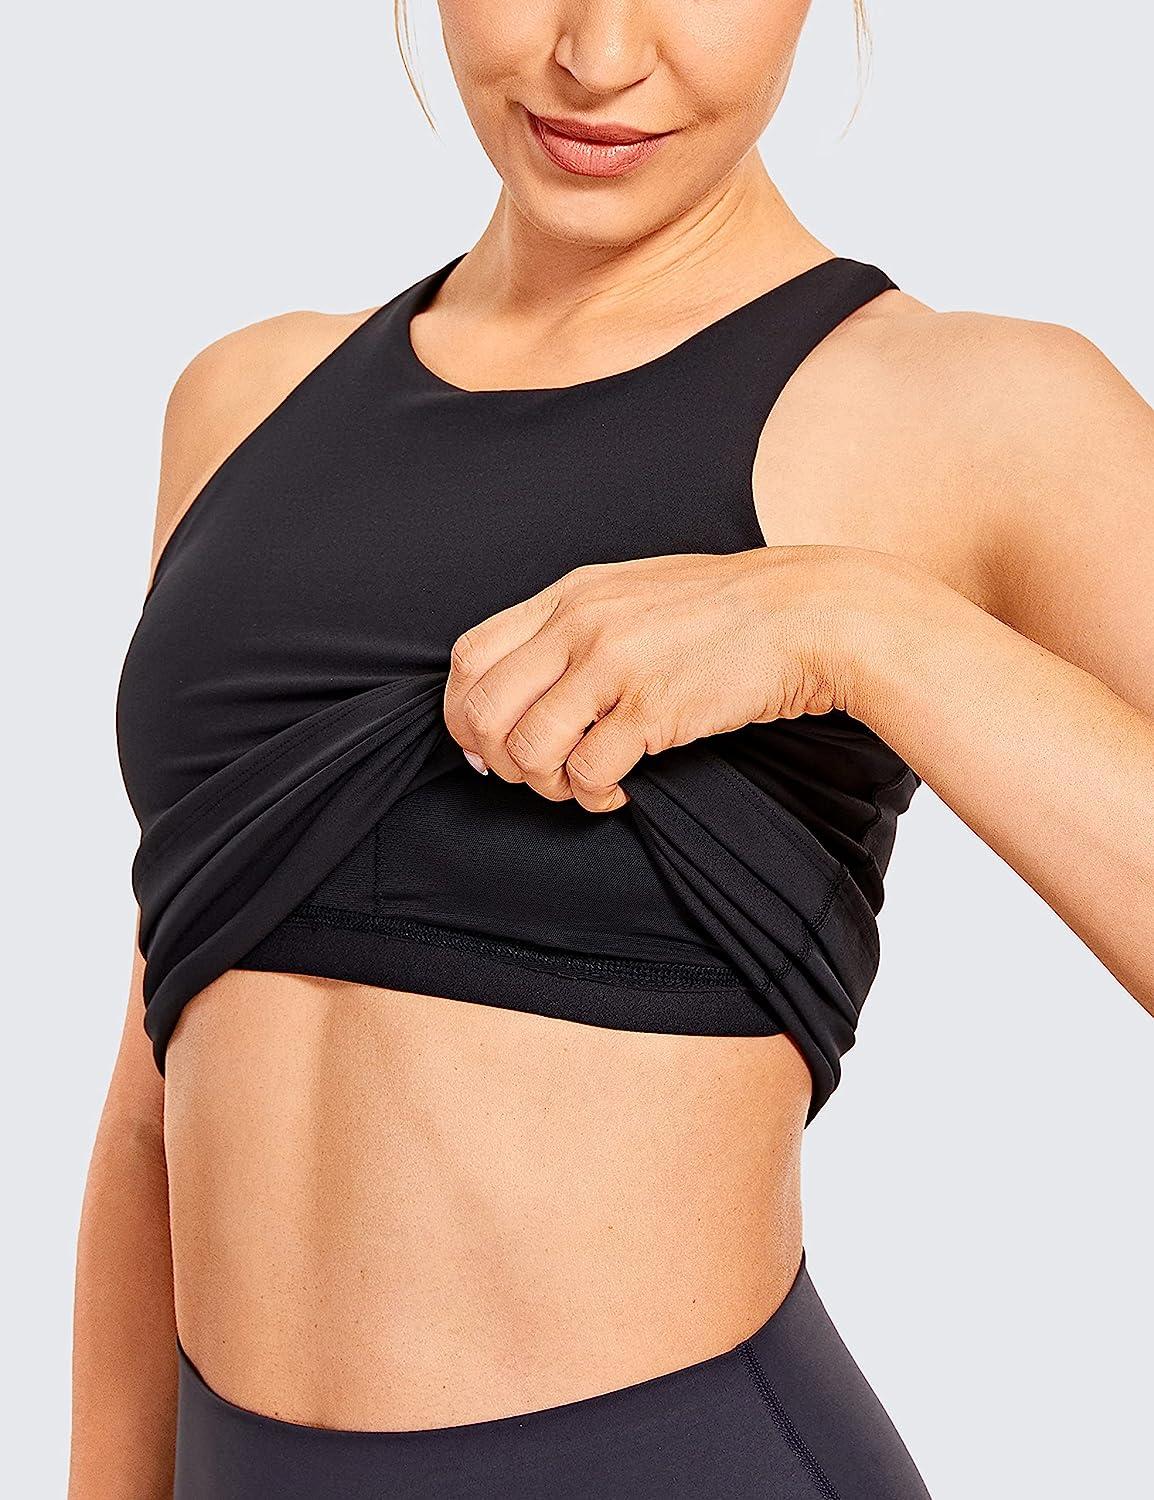 CRZ YOGA Womens High Neck Workout Tank Tops - with Built-in Shelf Bra  Racerback Athletic Sports Shirts Medium Black